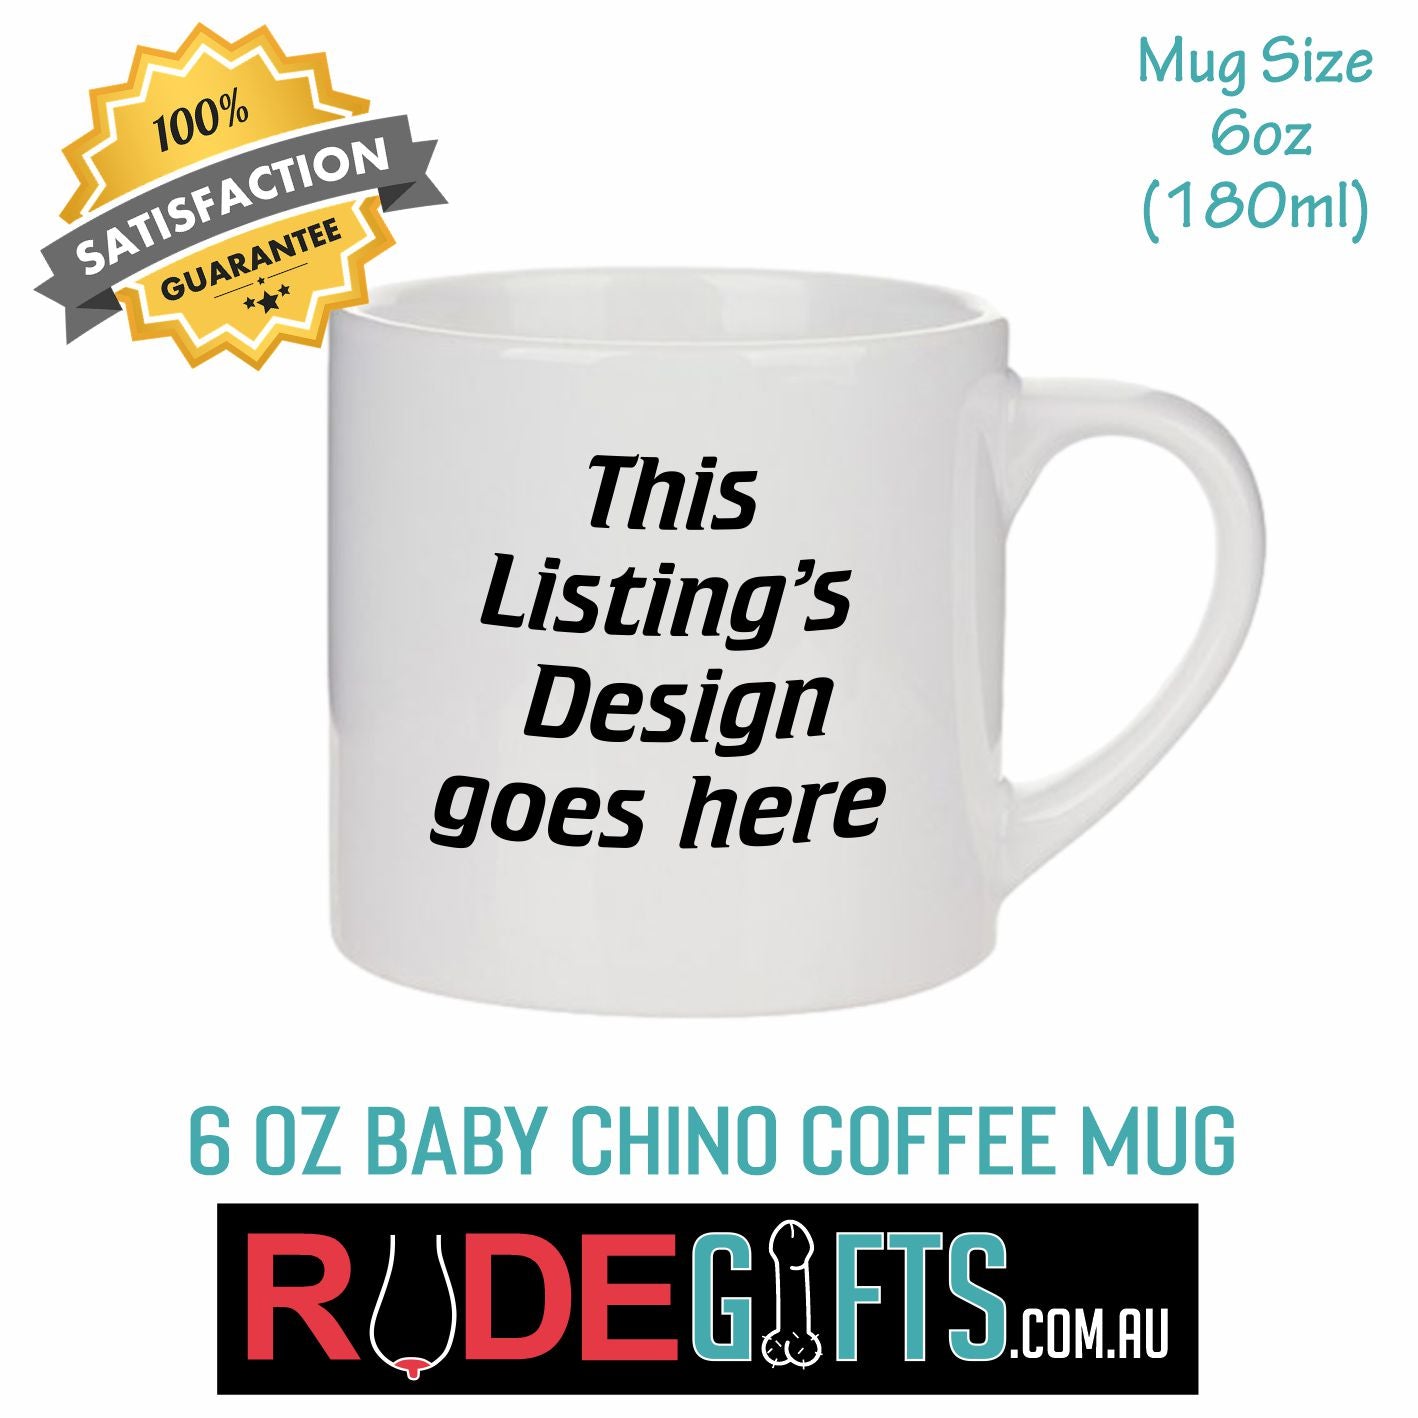 The New Cunt Coffee Mug